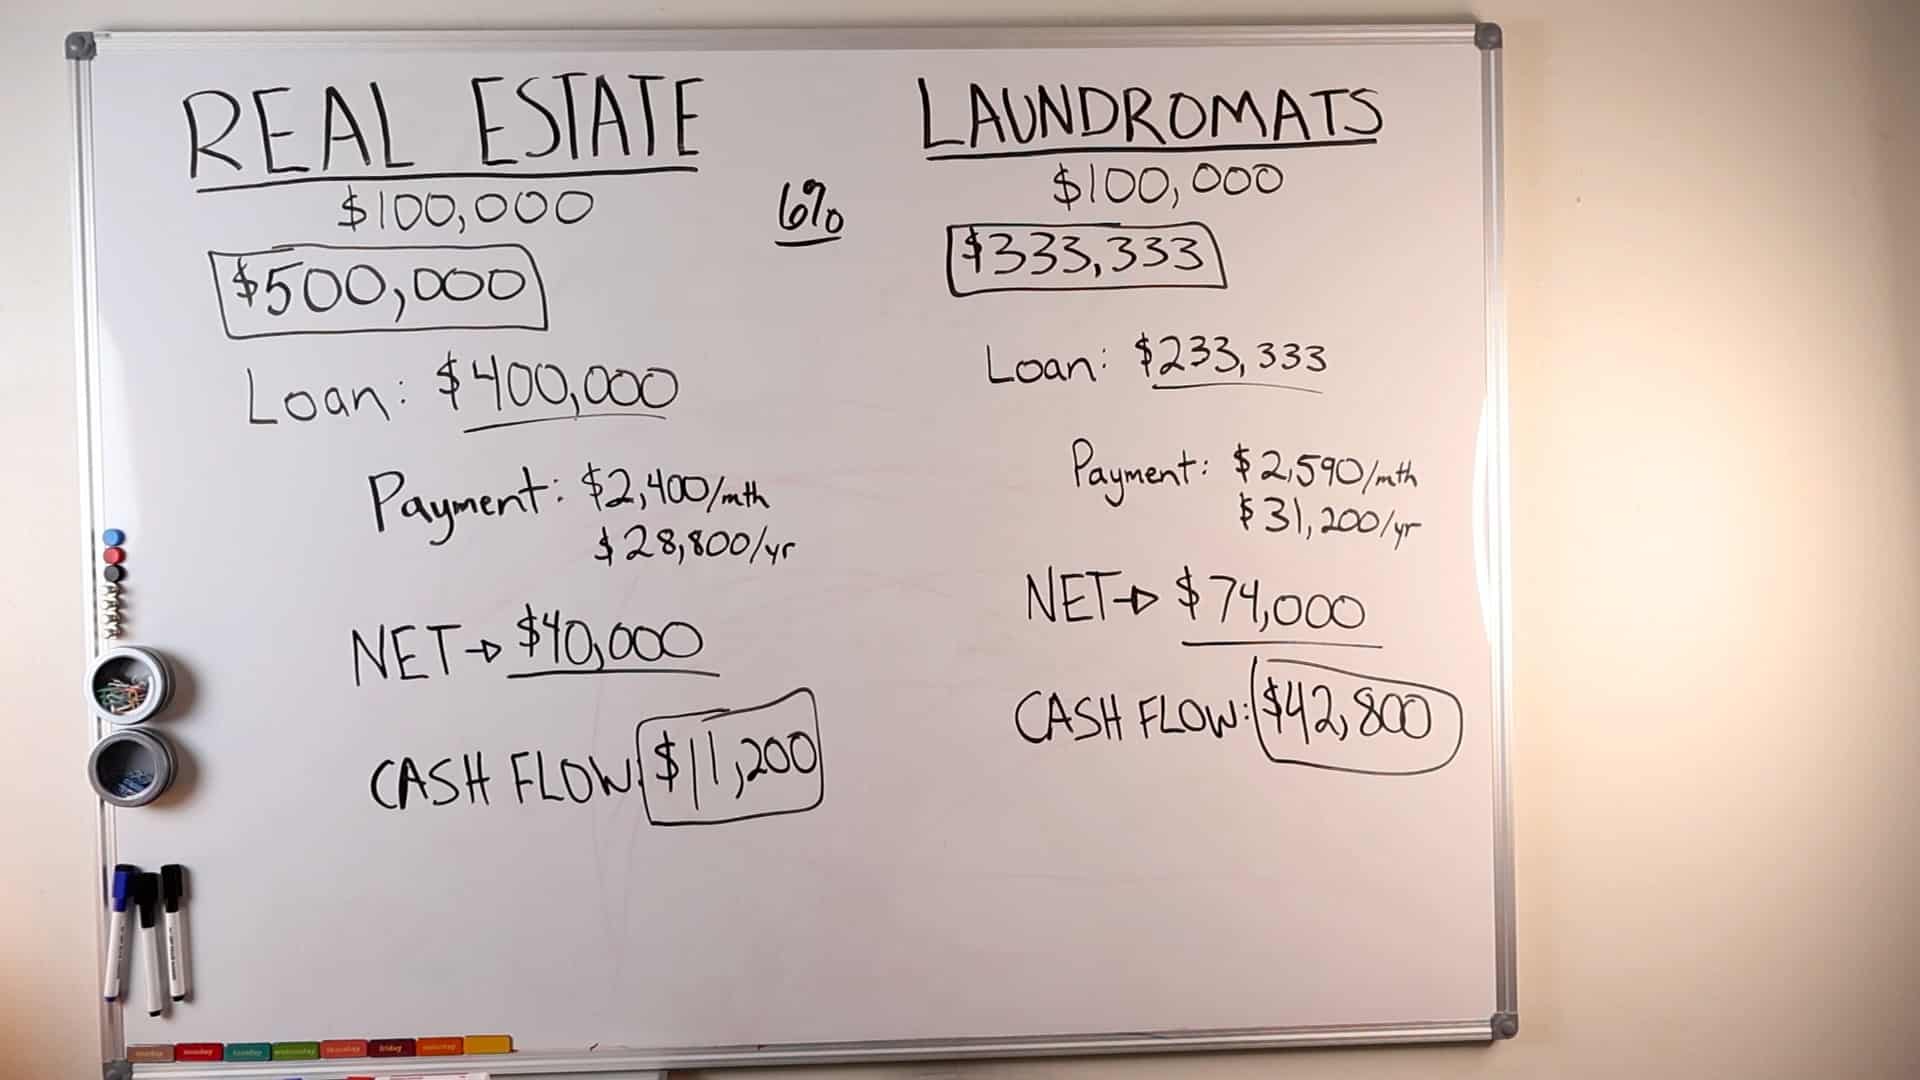 Real Estate vs Laundromat Cash Flows